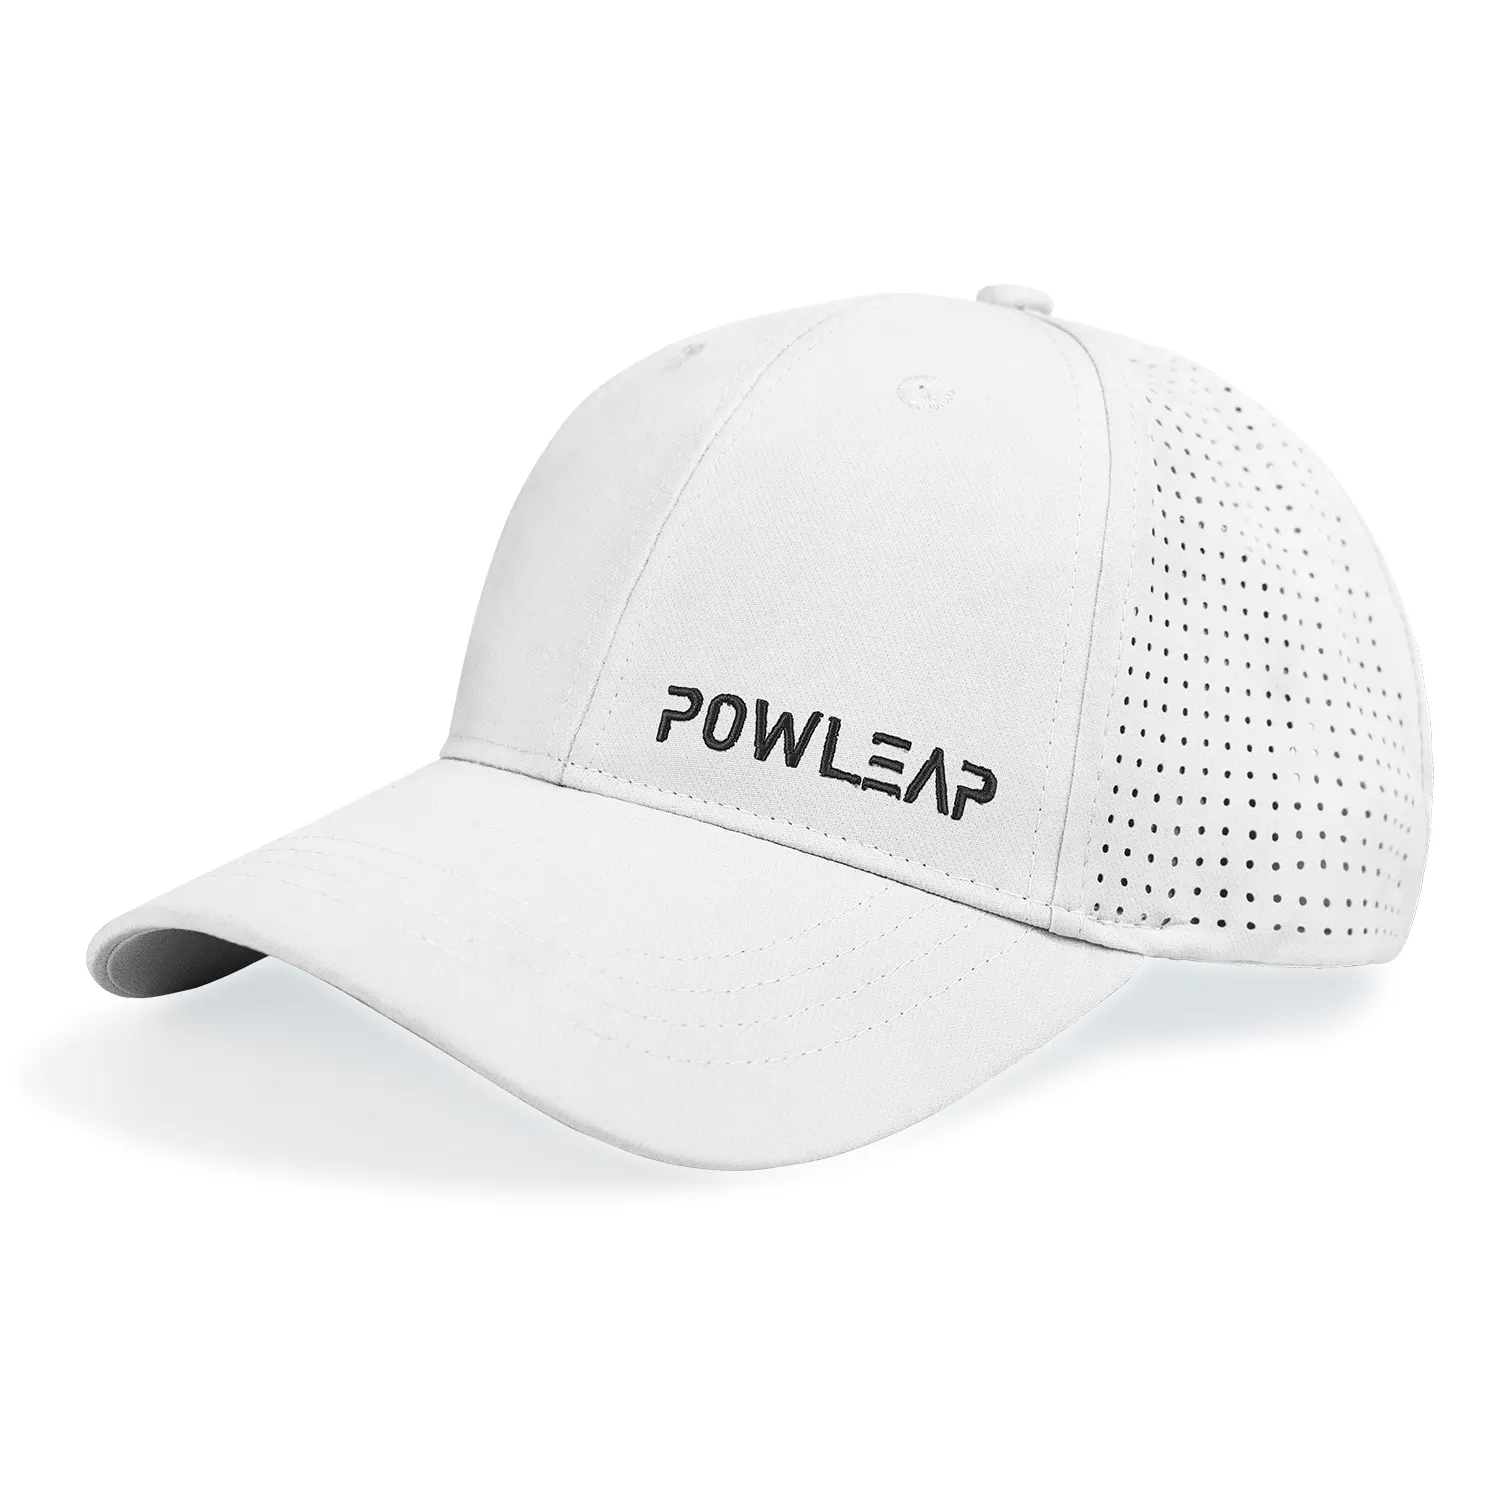 Best Item Lightweight Quick Dry Classic Sports Cap Ventilation Golf Caps Upf 50 Sunblock Baseball Caps